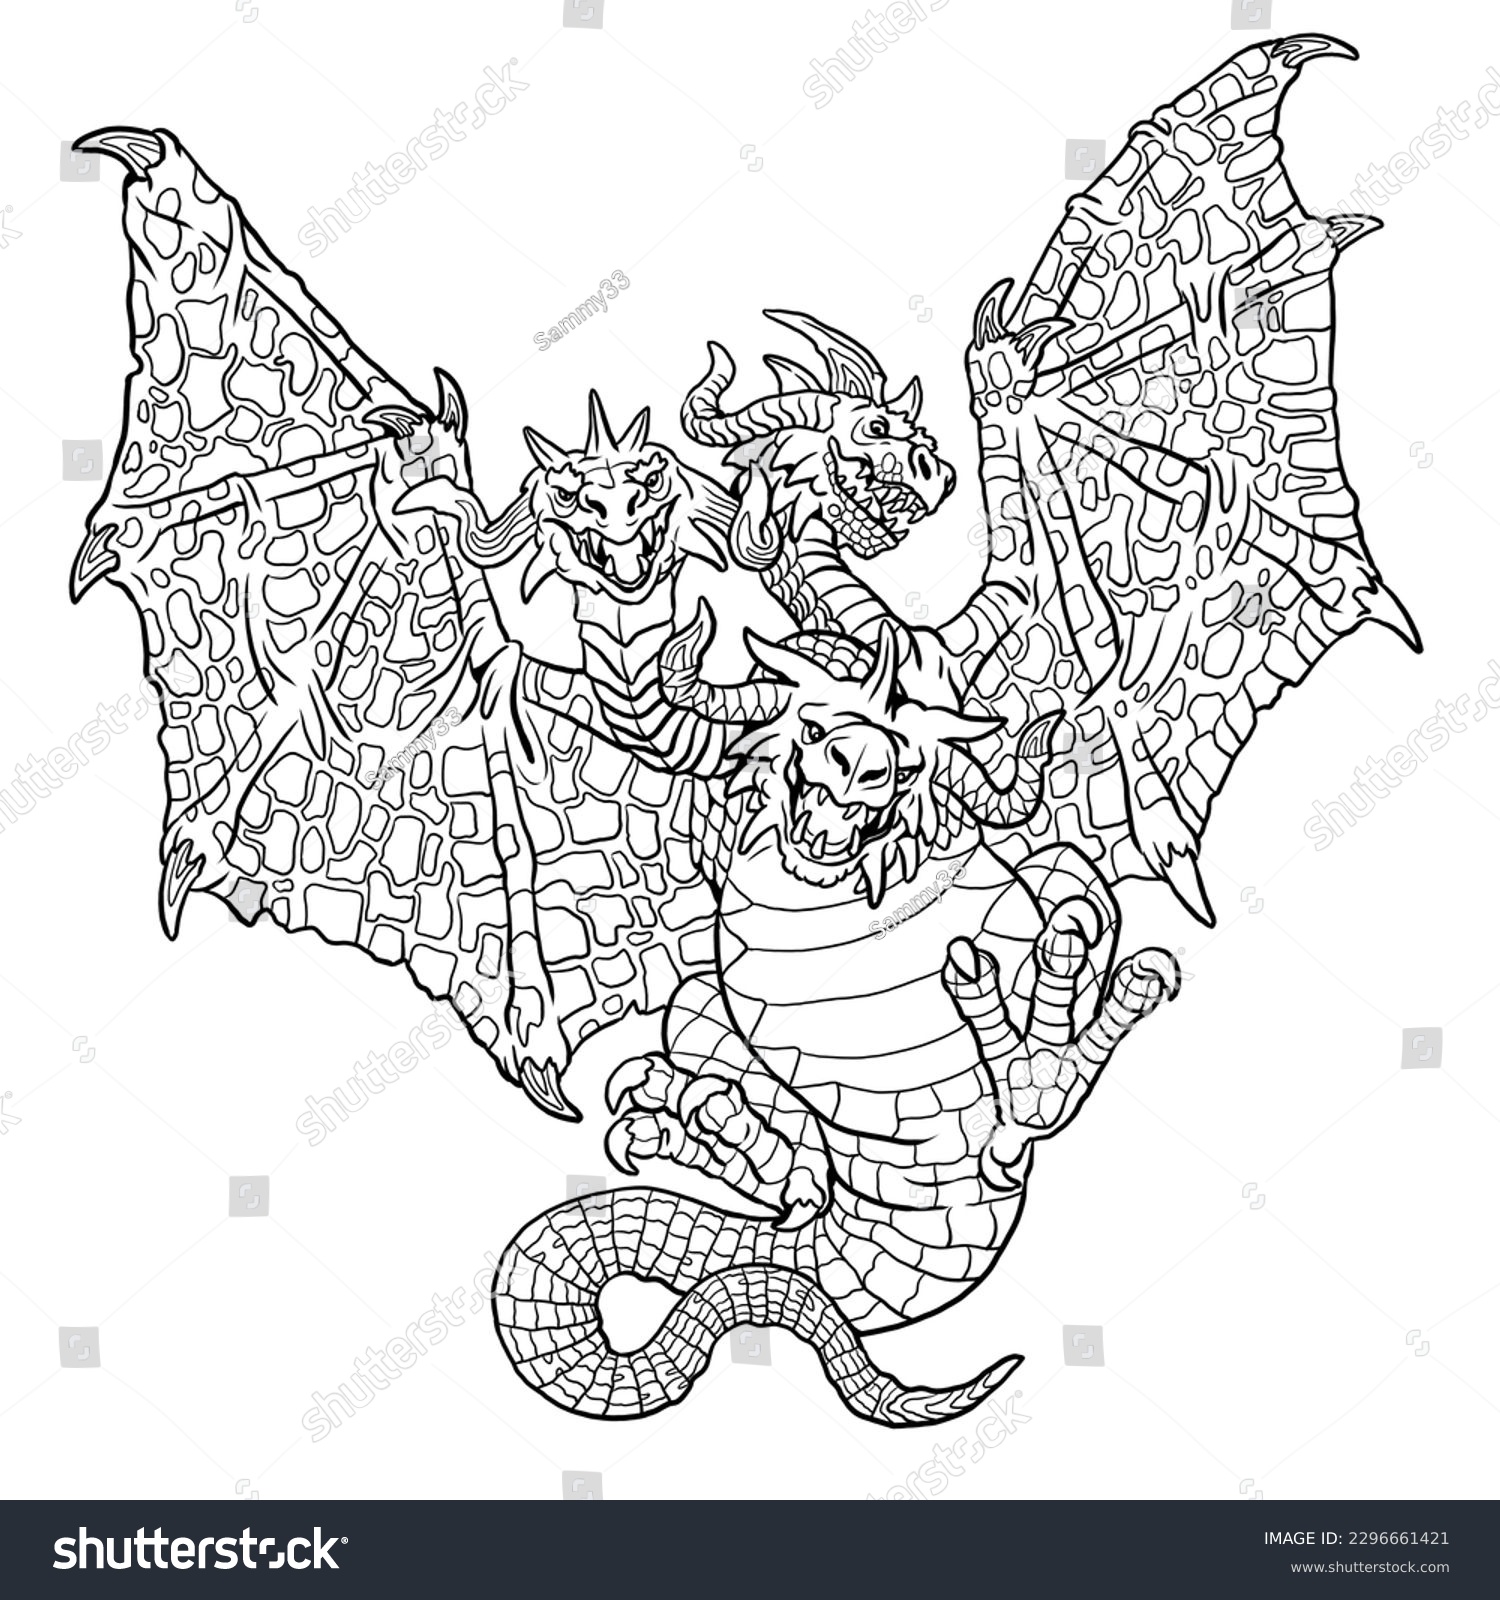 Threeheaded dragon coloring page fantasy illustration stock illustration